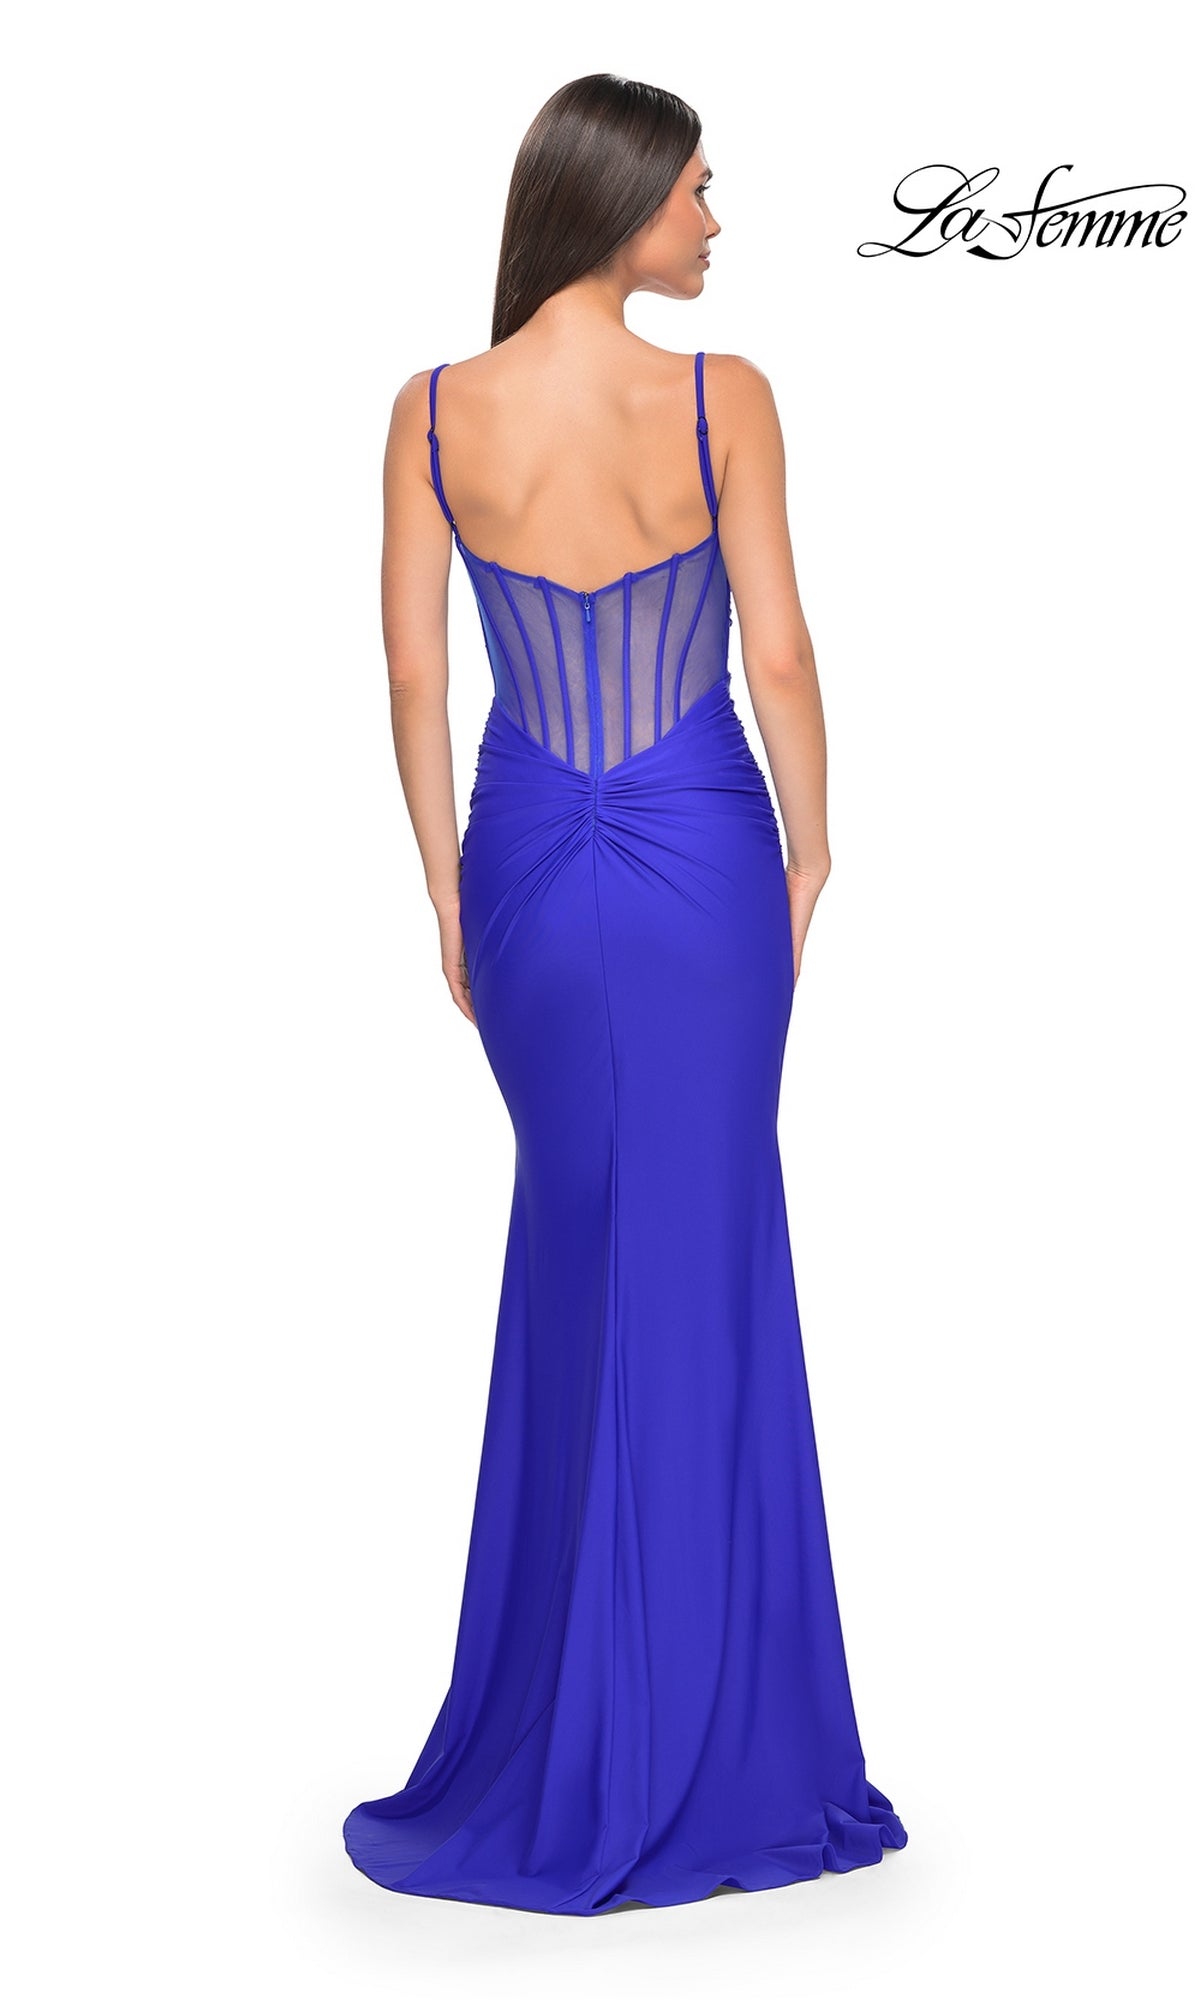  La Femme 32153 Formal Prom Dress